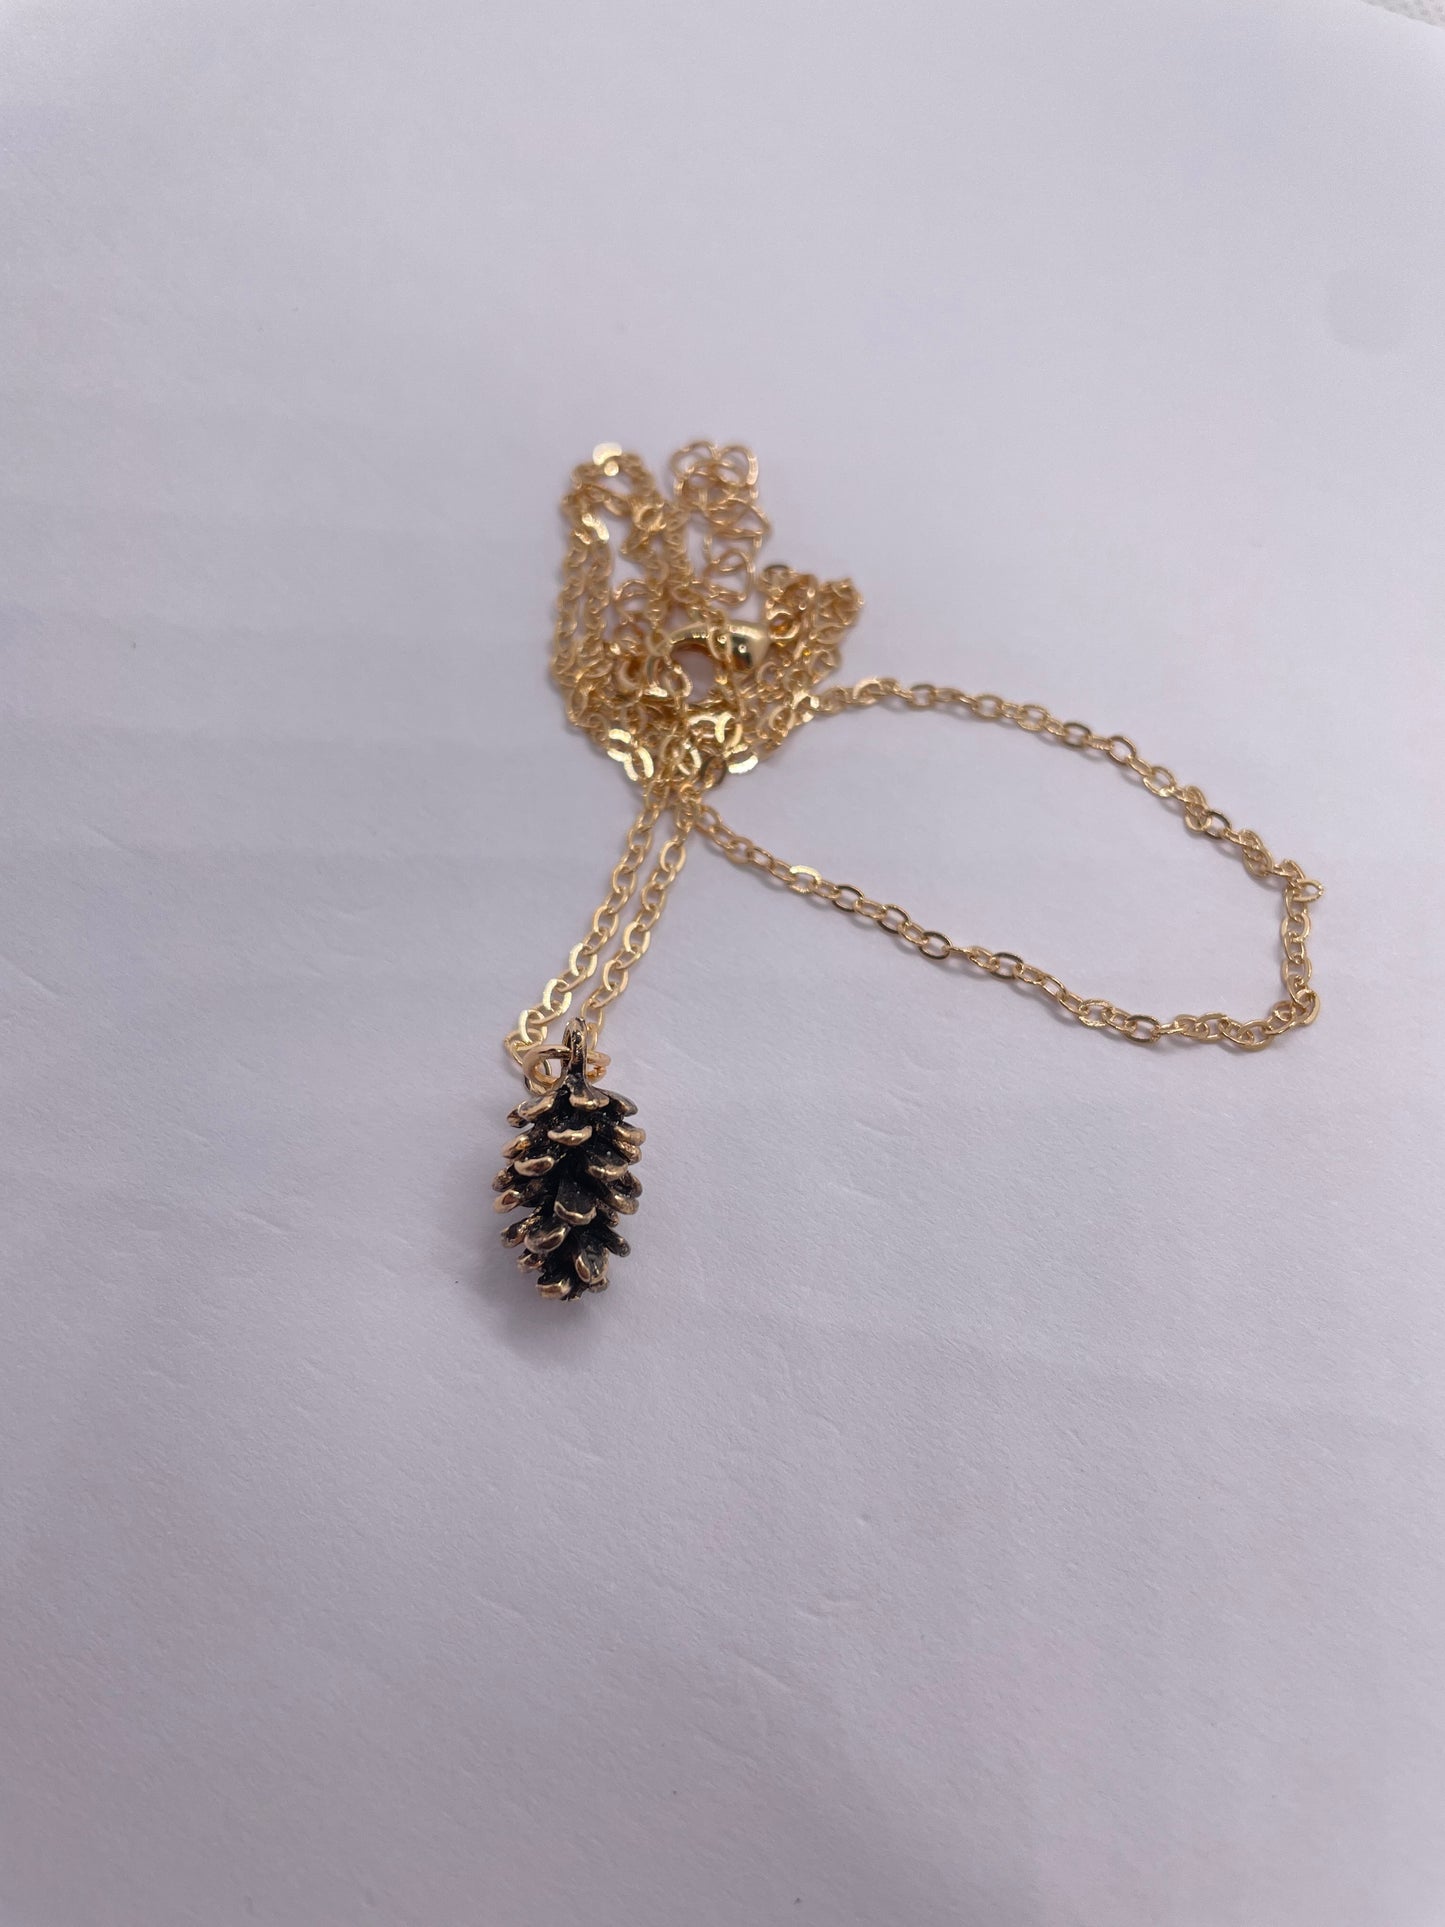 Pine Cone Necklace - Ancient Bronze